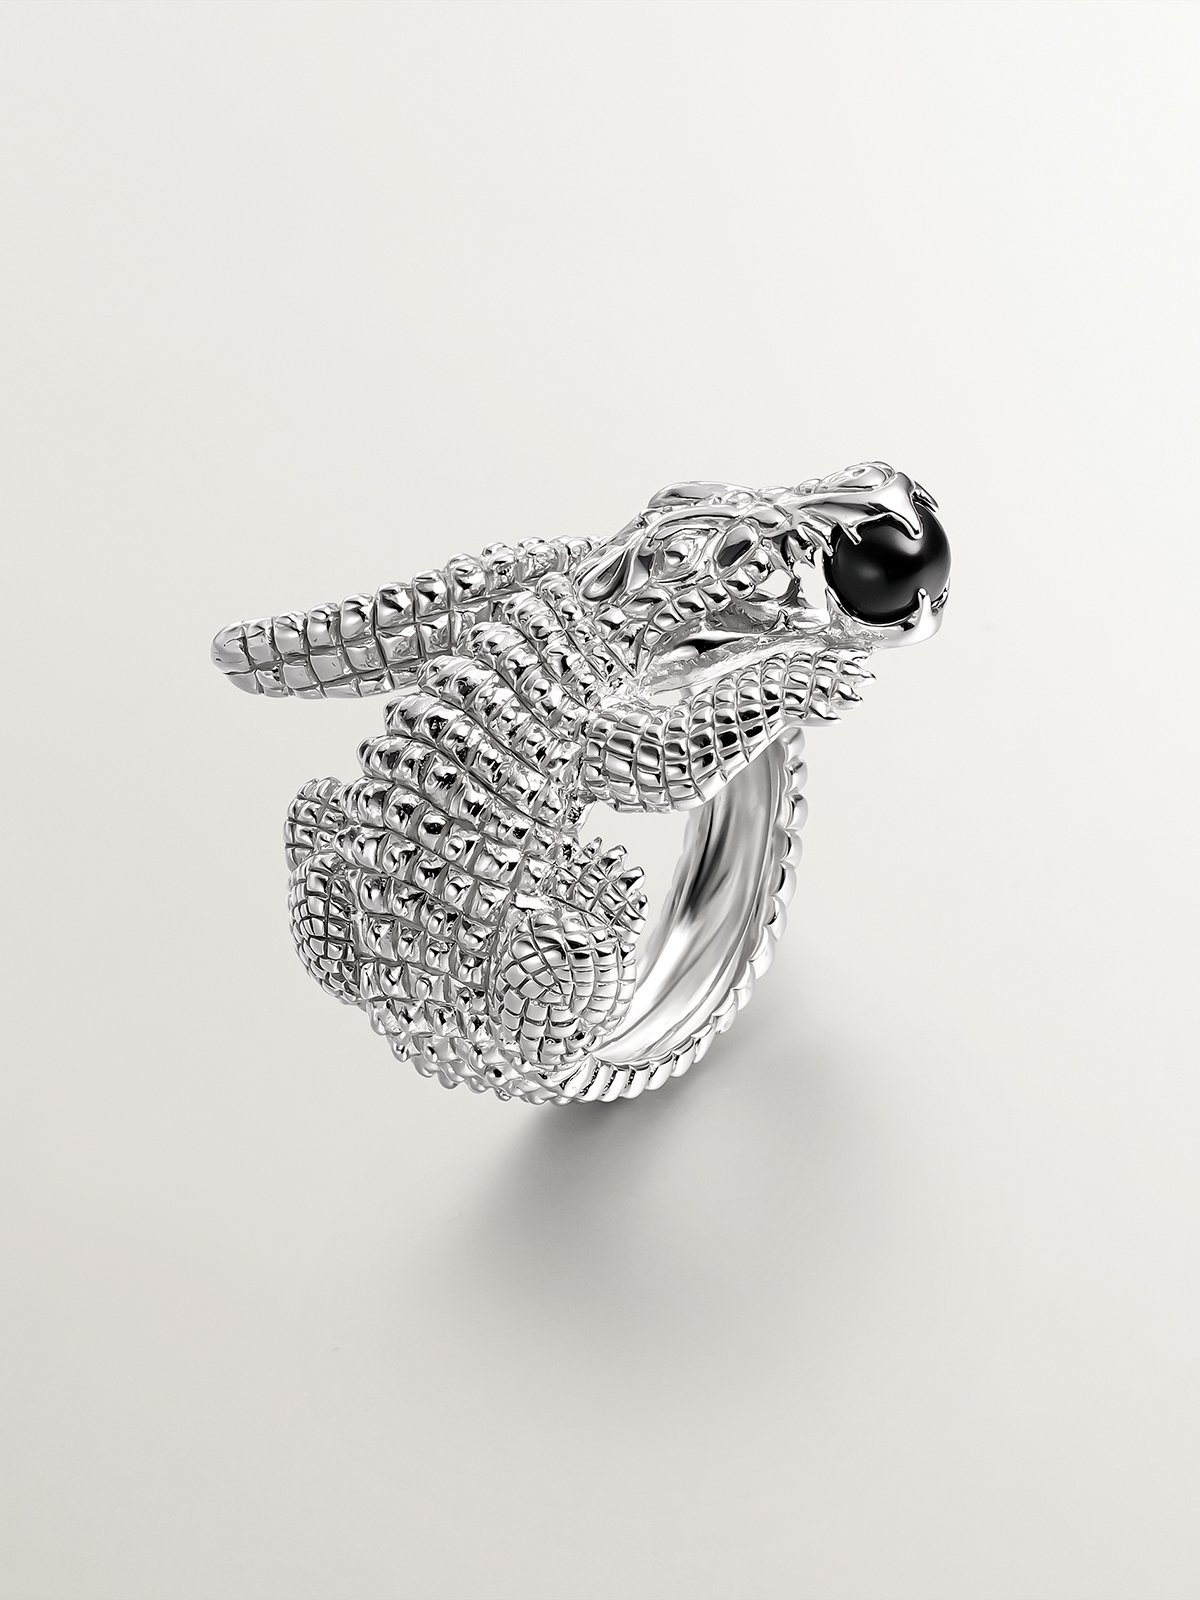 925 silver ring shaped like crocodile and black ónix